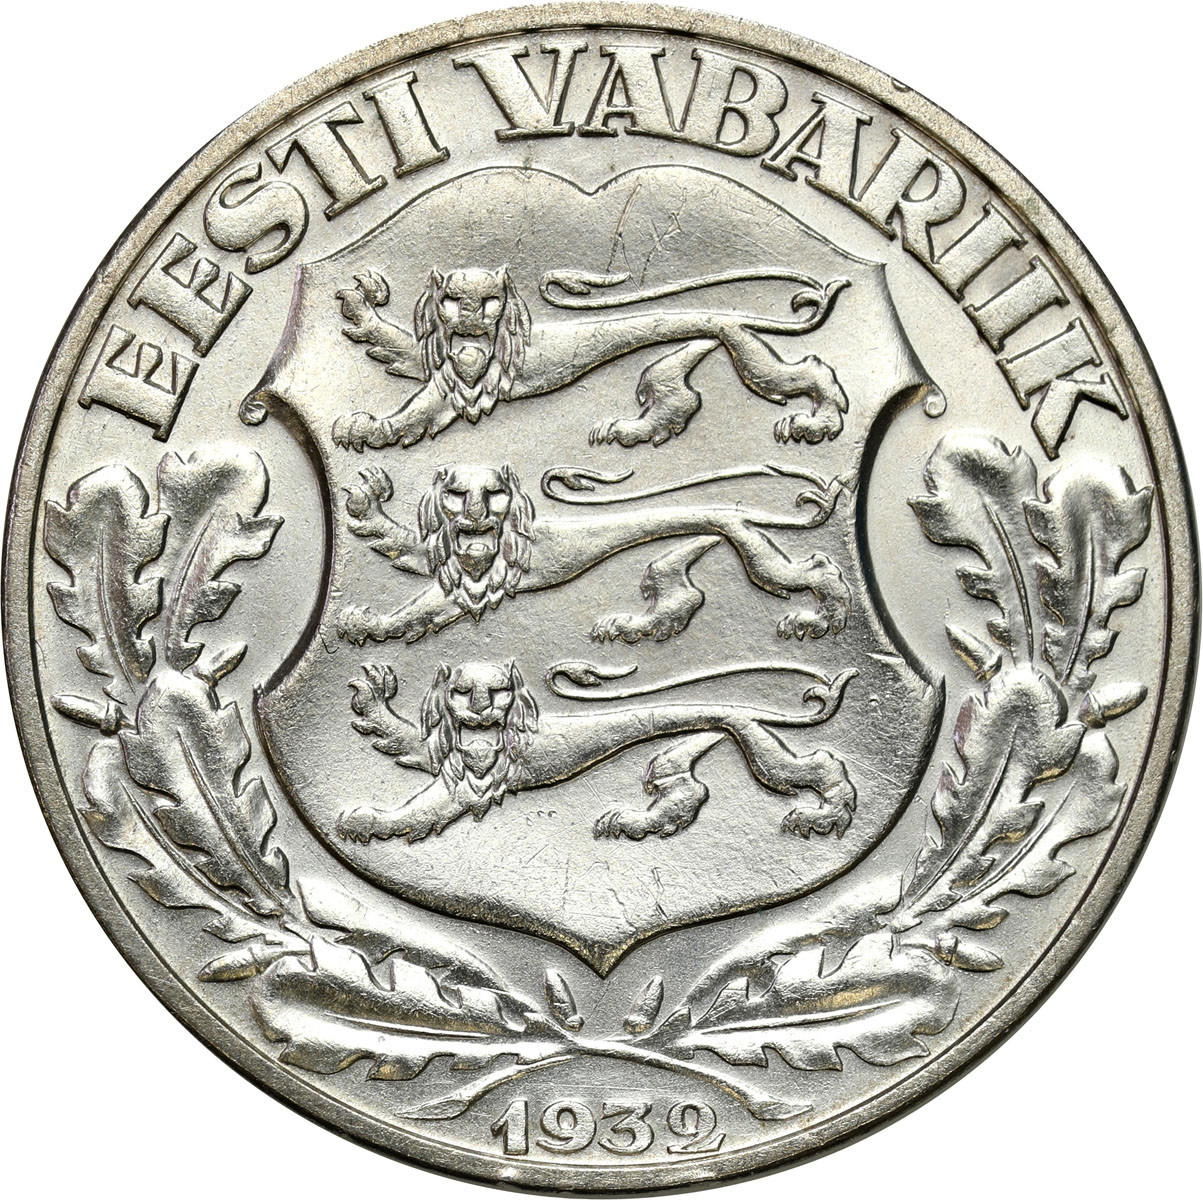 Estonia. 2 korony 1932, Tallinn